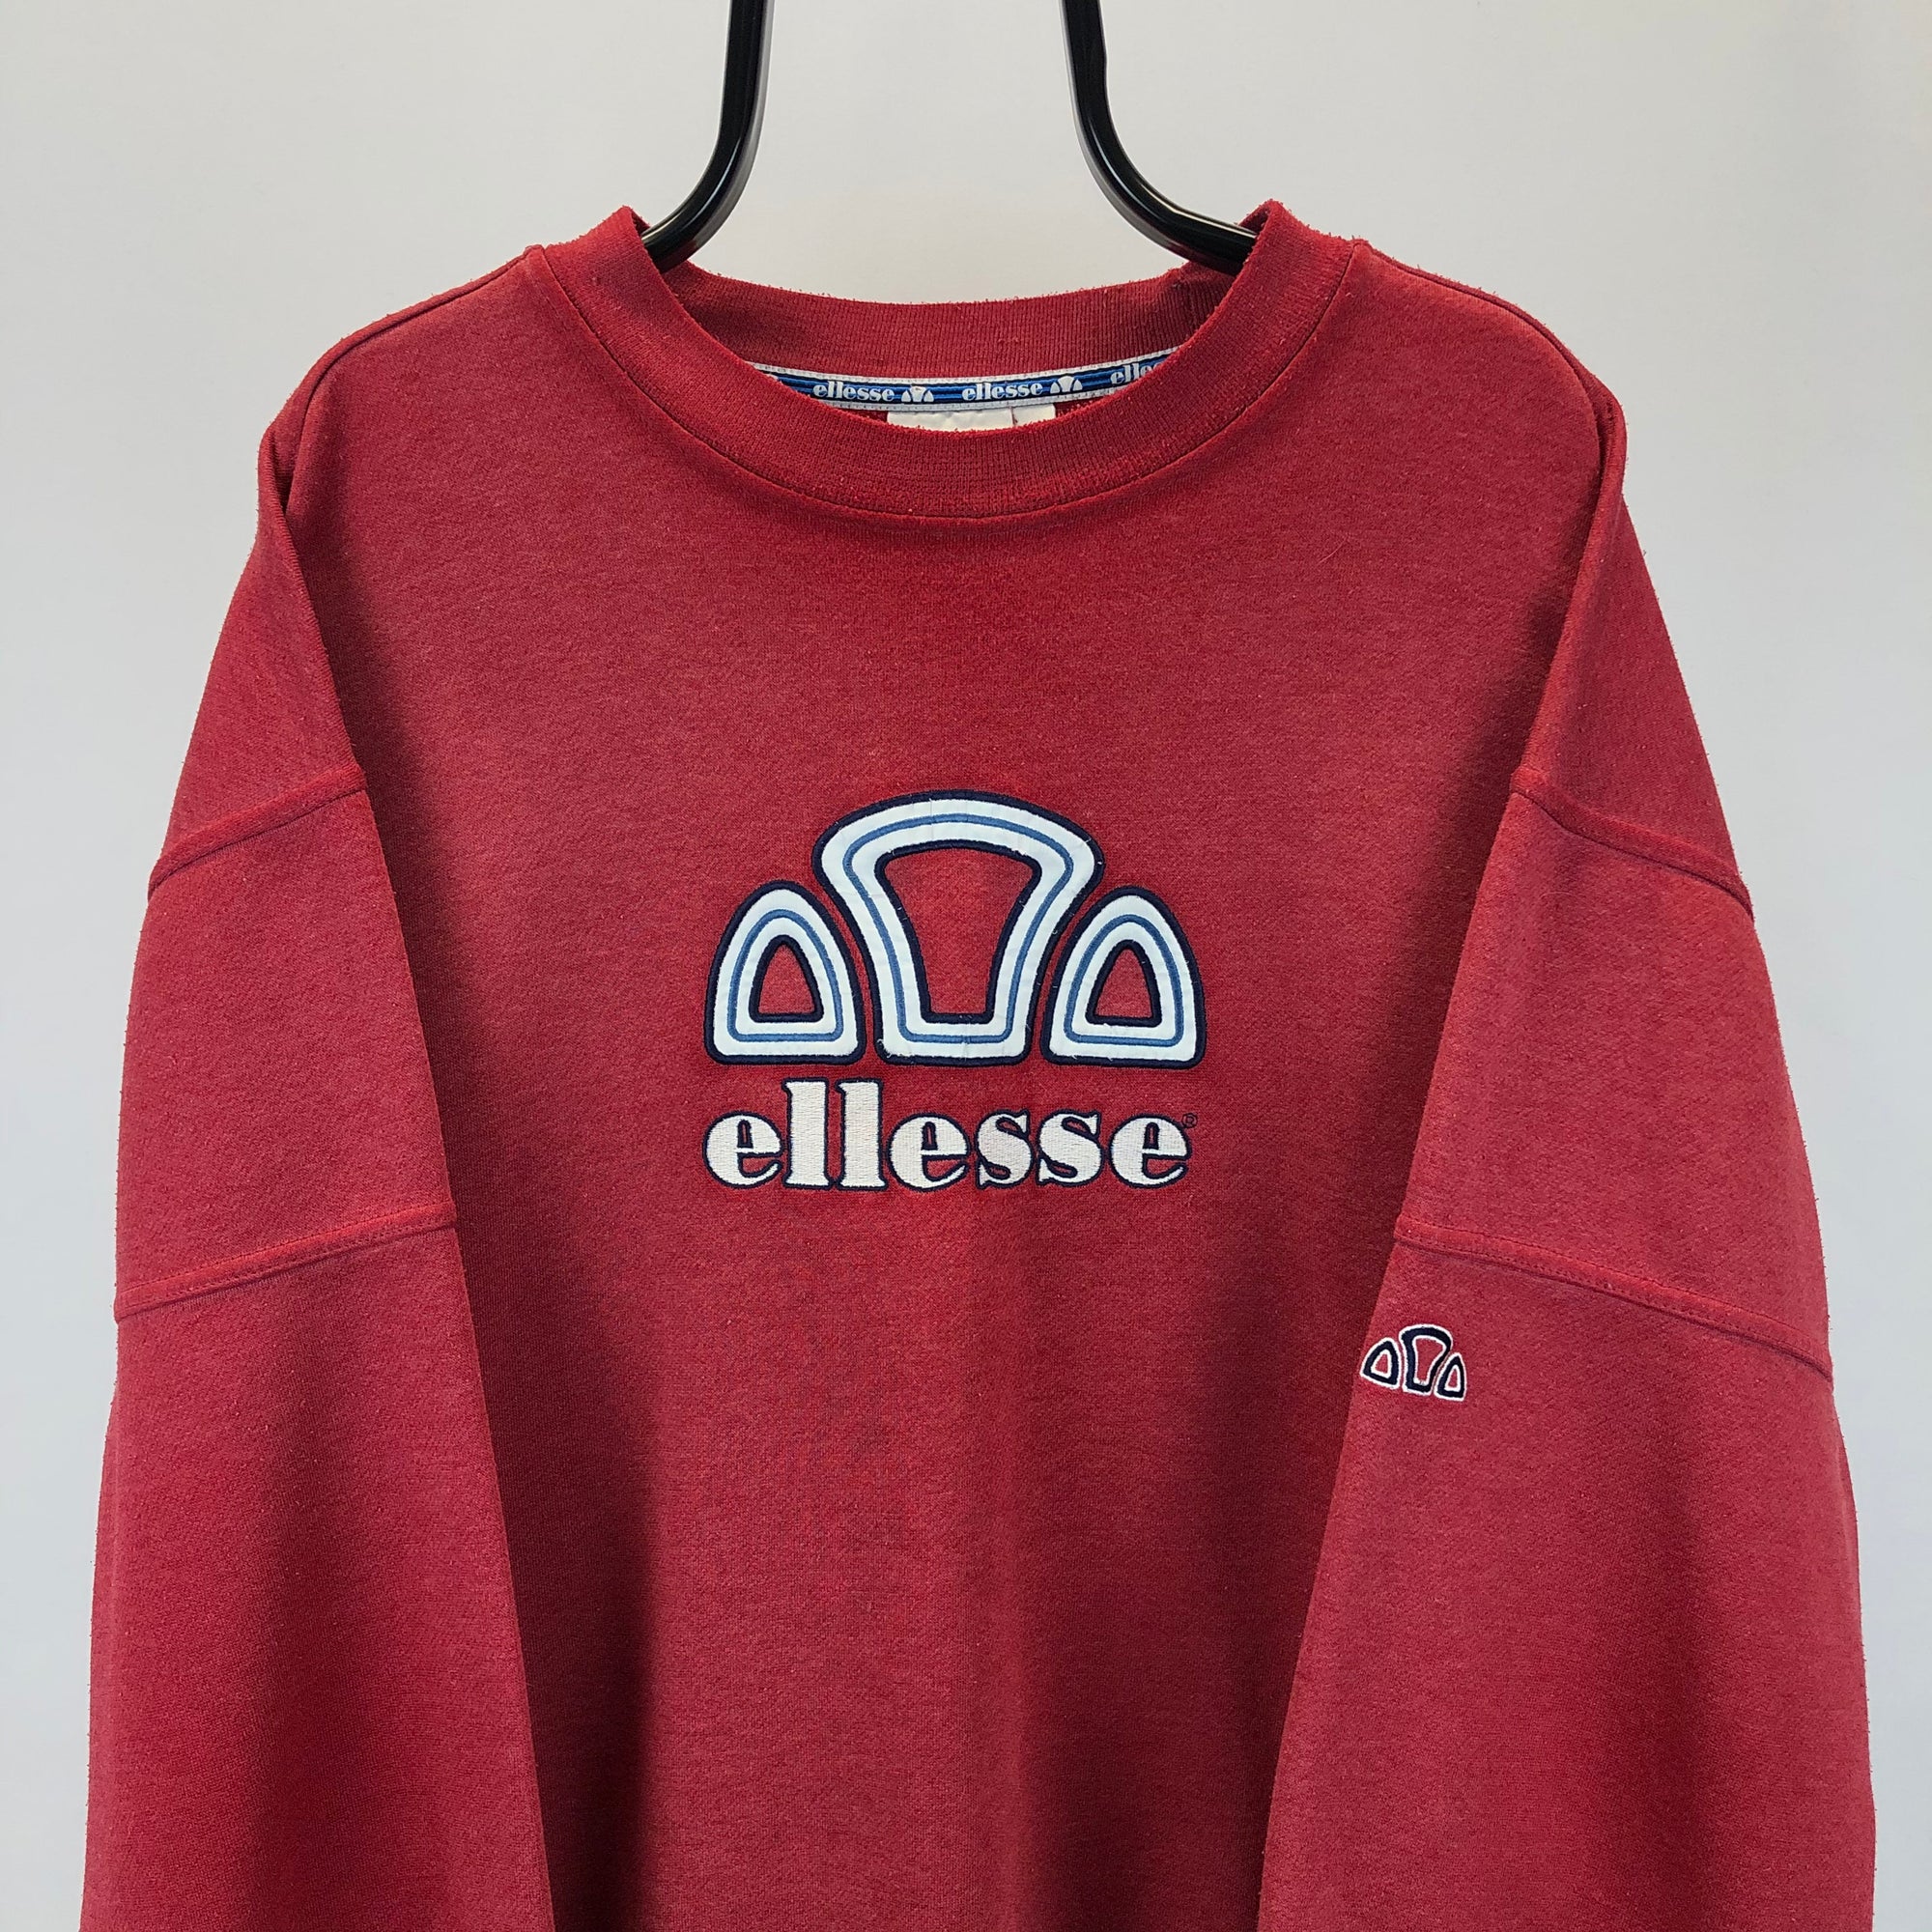 Vintage 90s Ellesse Spellout Sweatshirt in Burnt Red - Men's Large/Women's XL